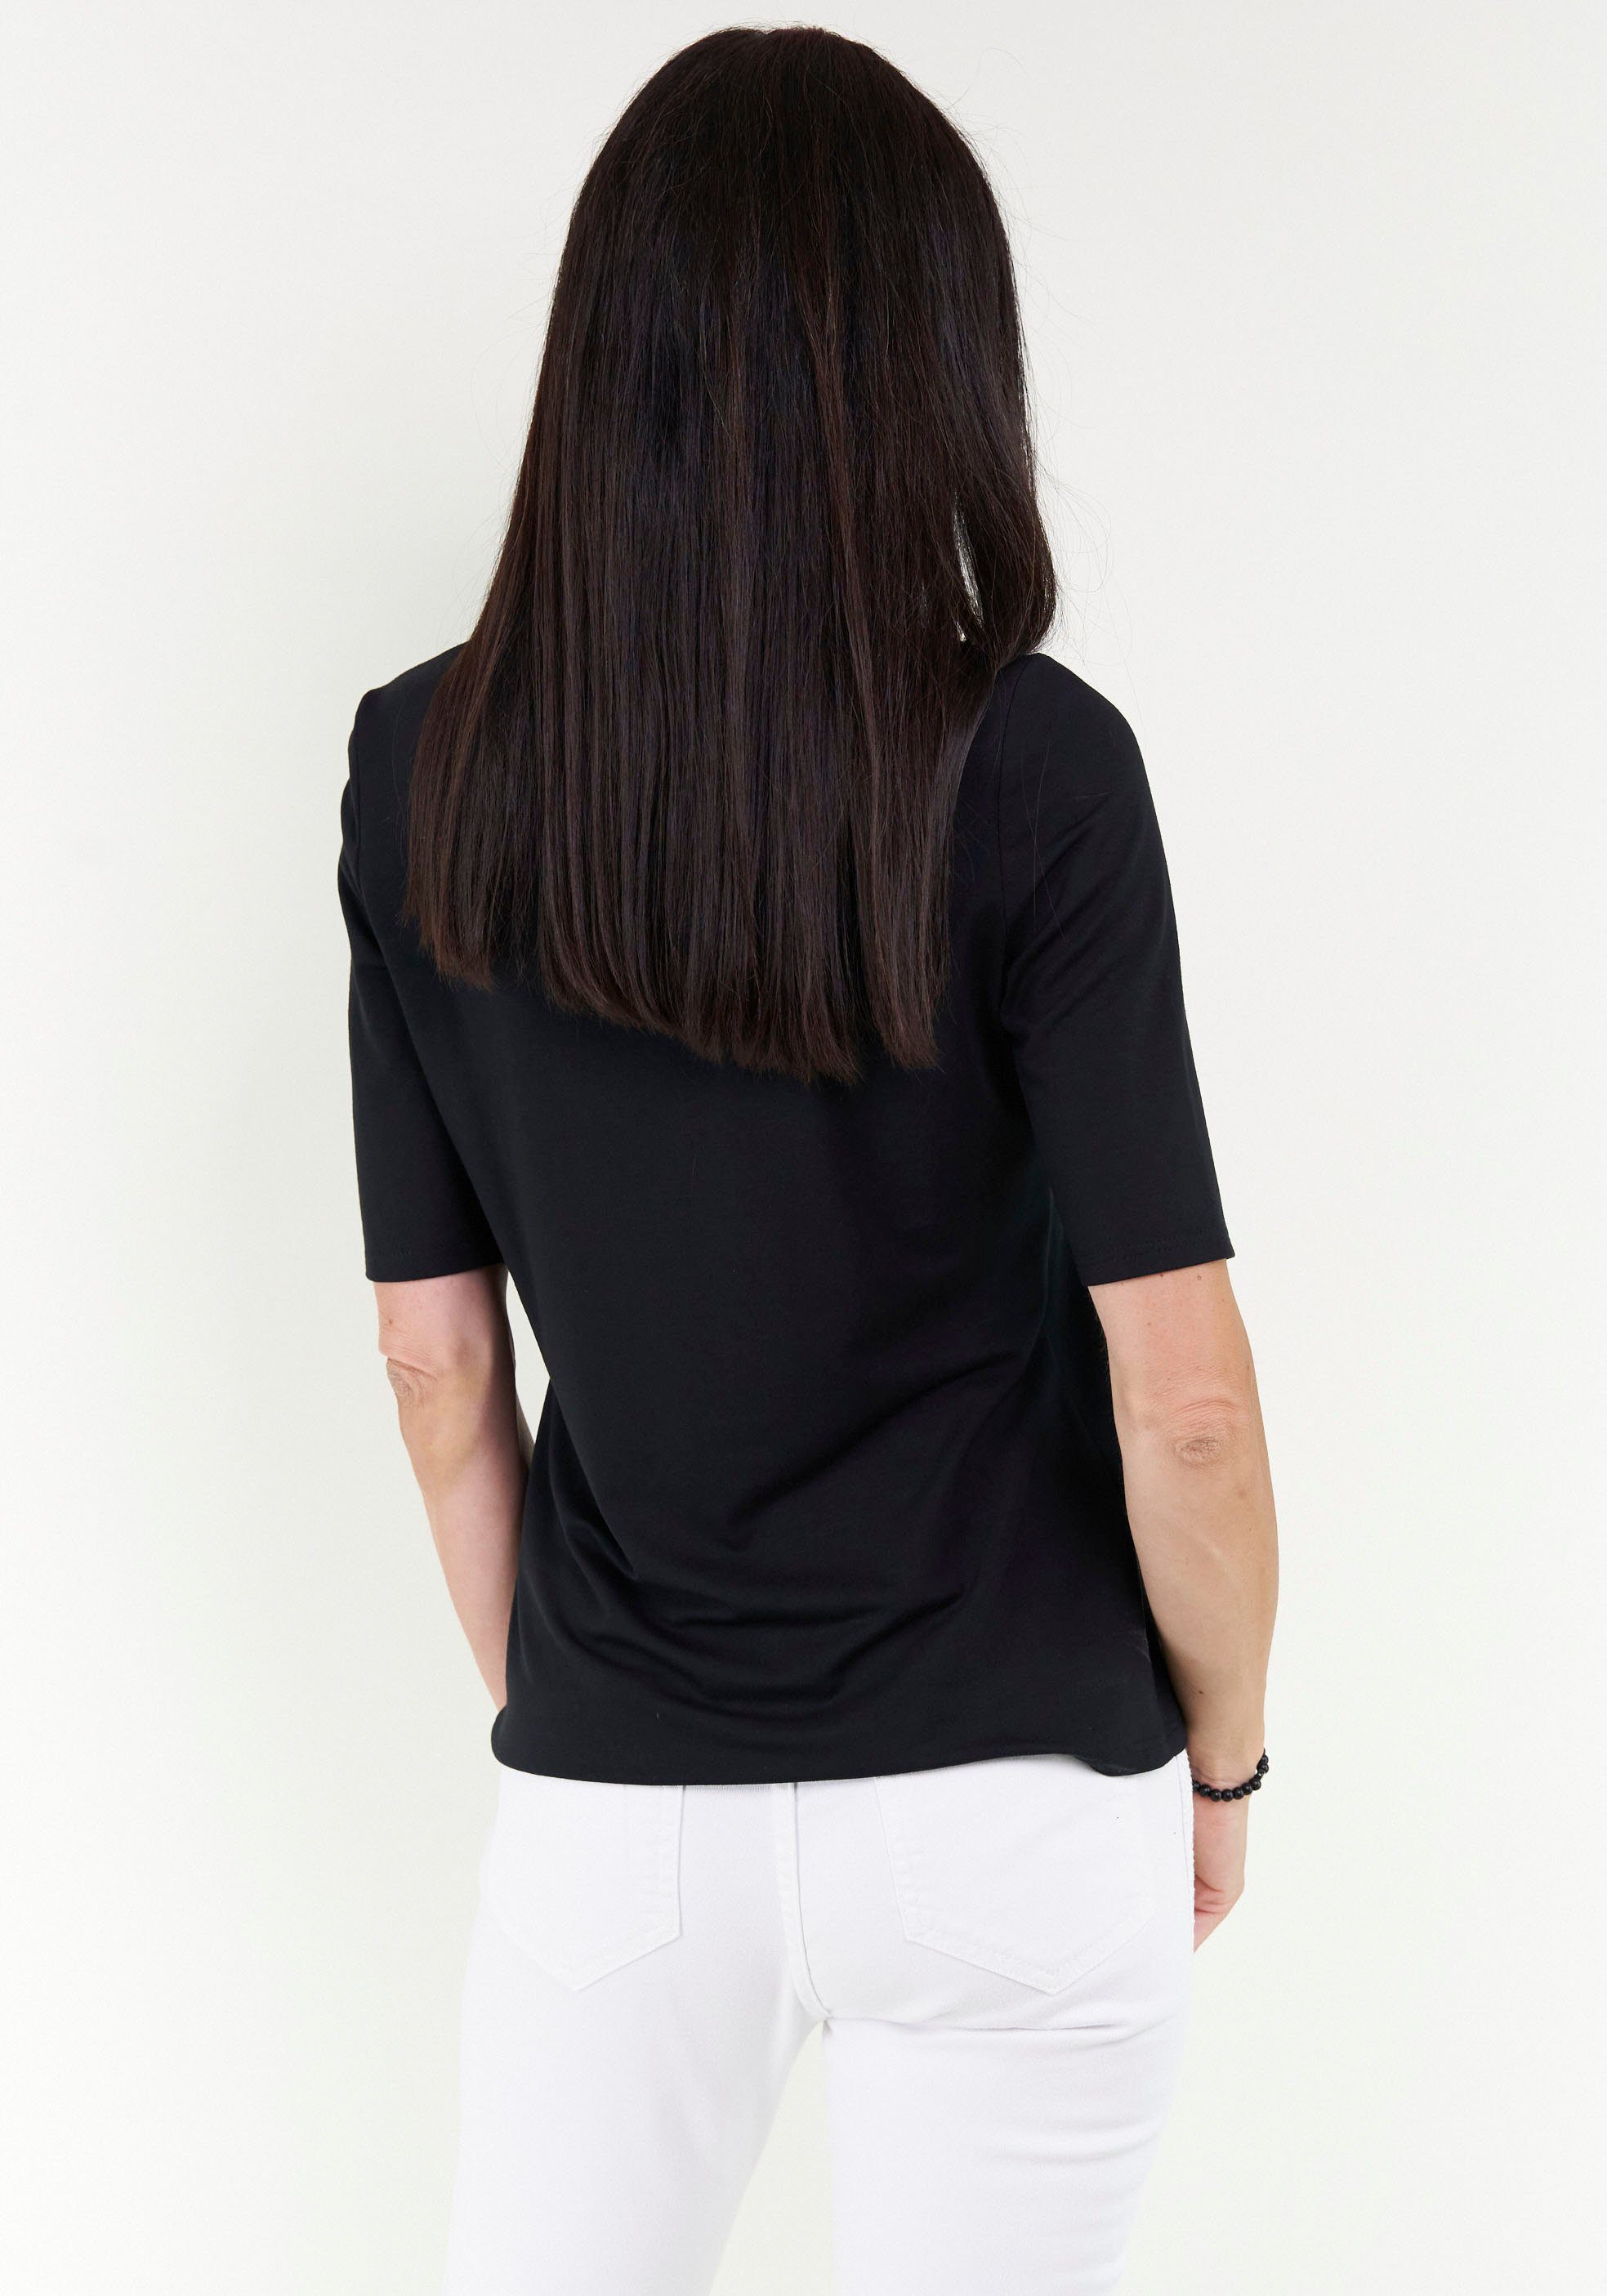 Seidel Moden V-Shirt mit Halbarm softem IN schwarz GERMANY Material, MADE aus